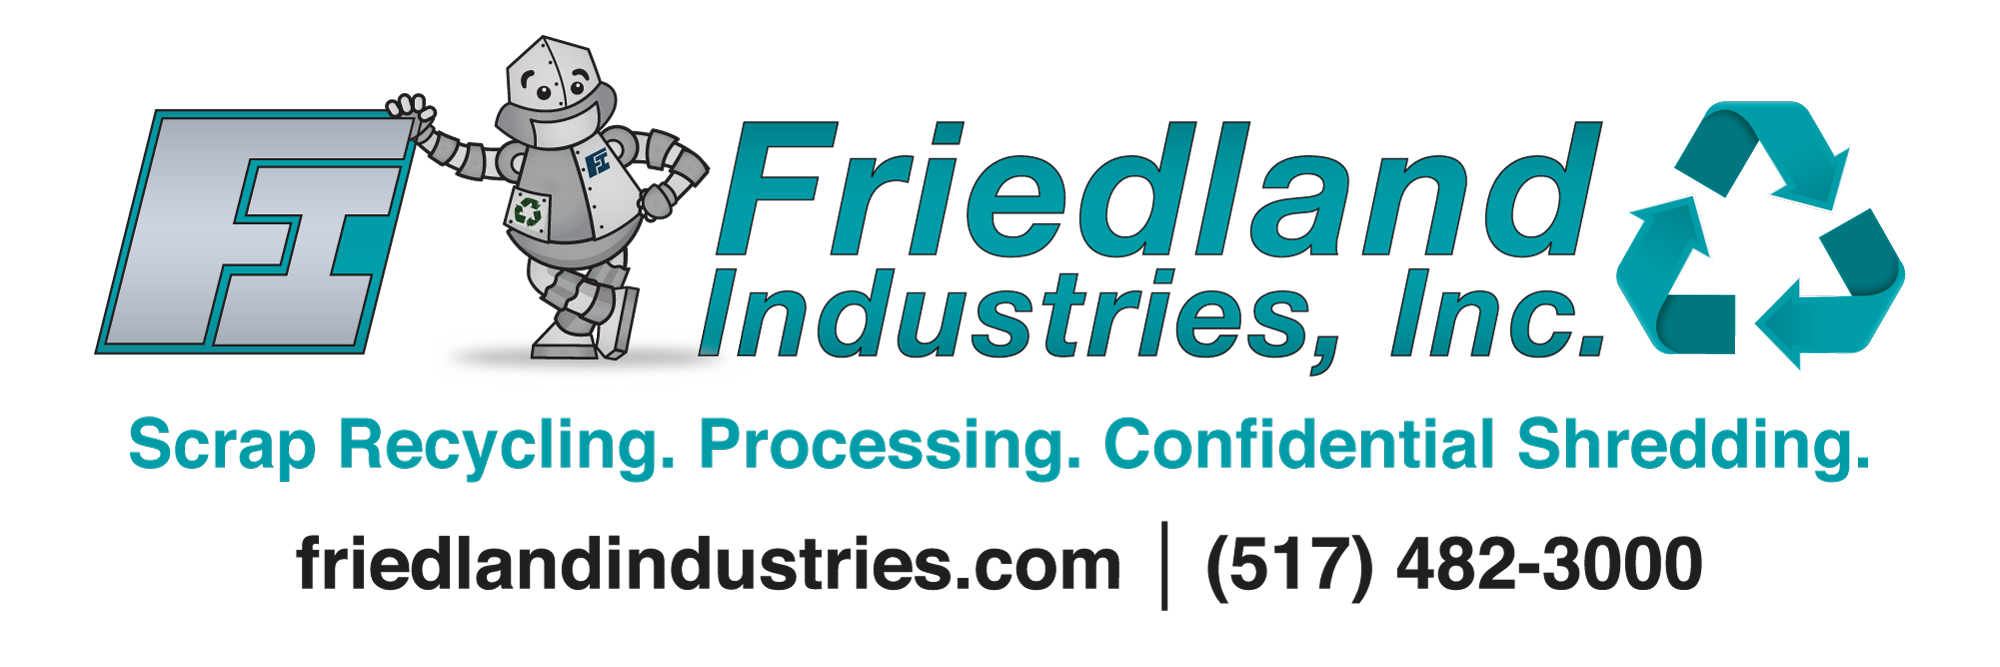 Friedland Industries Inc Logo